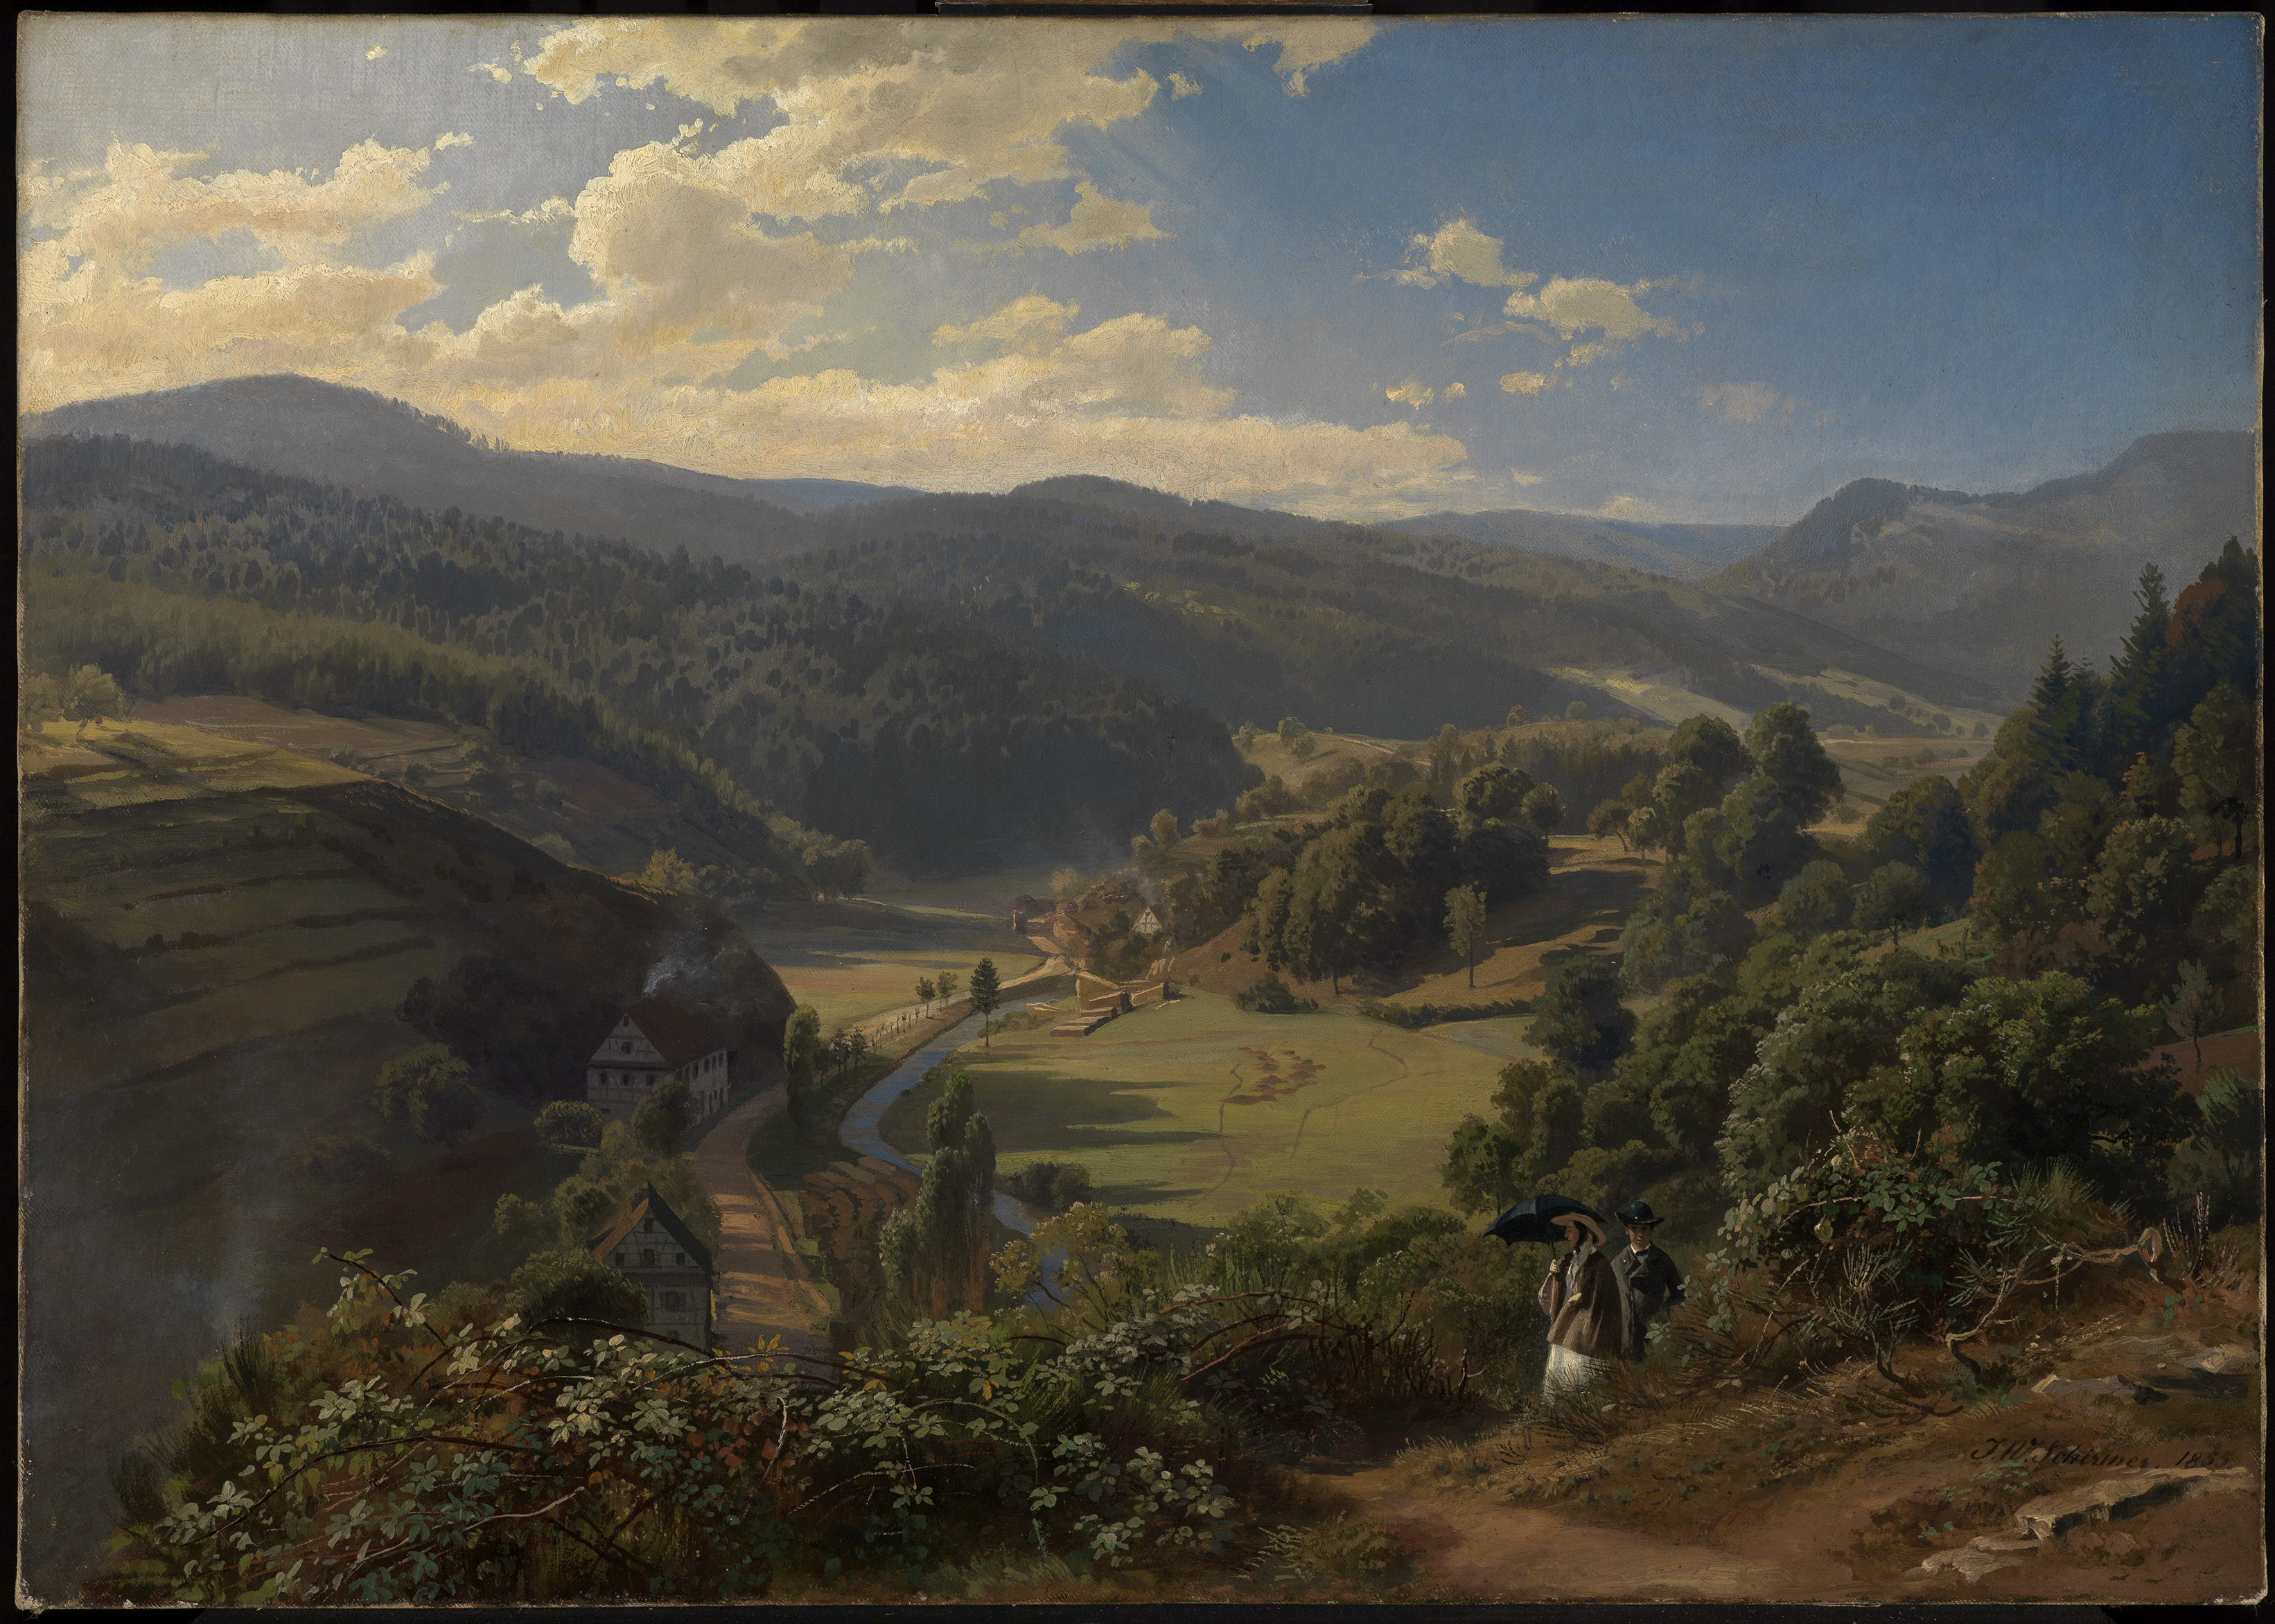 Geroldsauer-völgy Baden-Baden közelében by Johann Wilhelm Schirmer - 1855 - 59,5 x 82,5 cm 